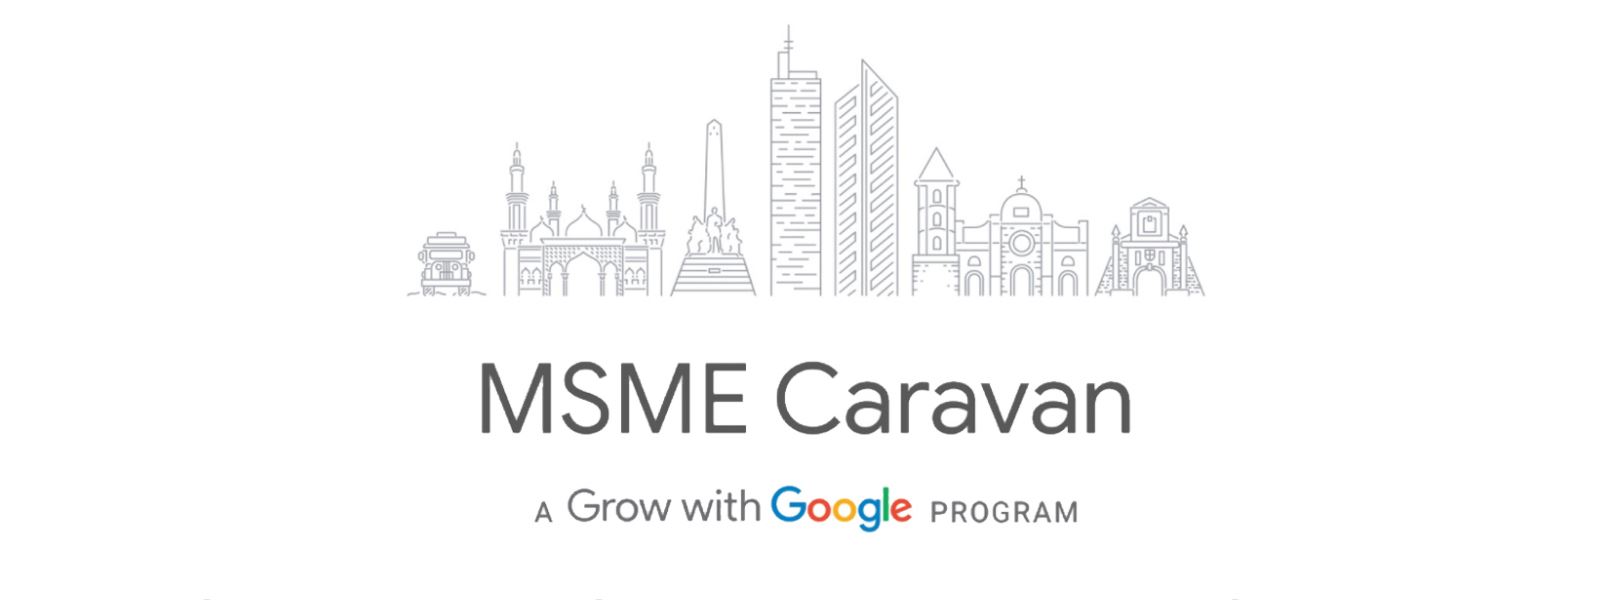 Google Free webinar for MSMEs